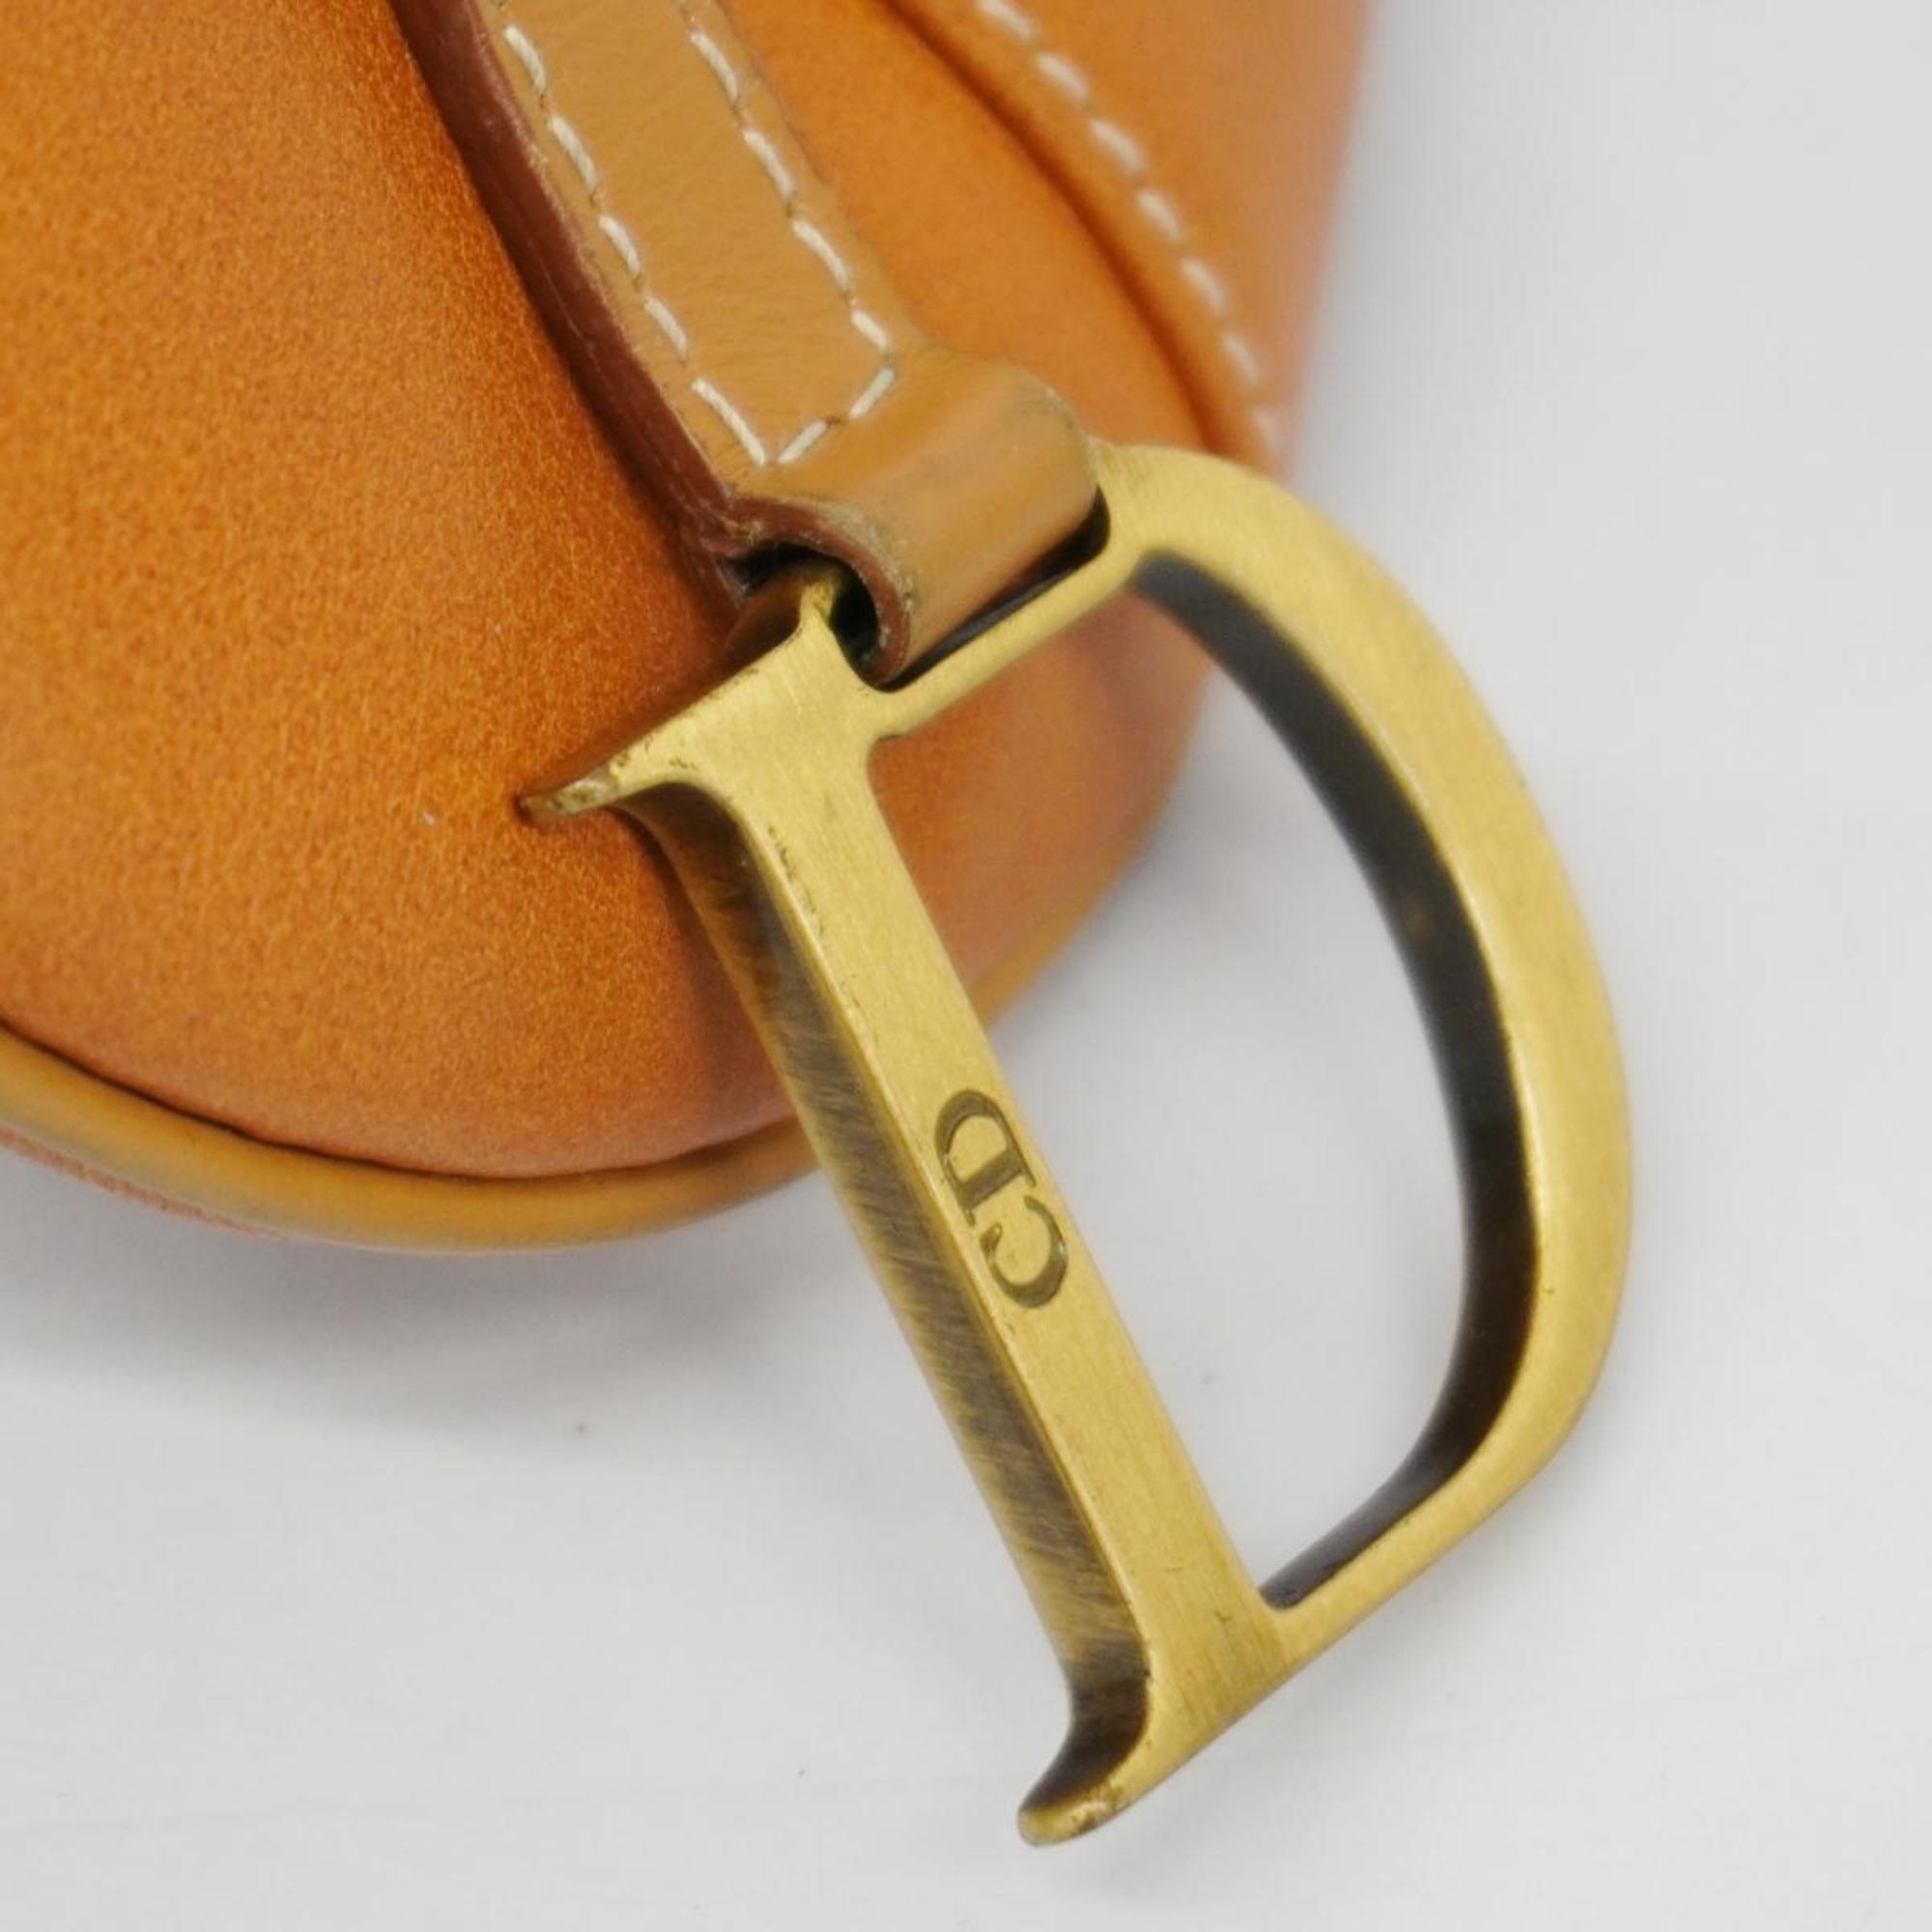 Christian Dior Waist Bag Saddle Leather Brown Women's